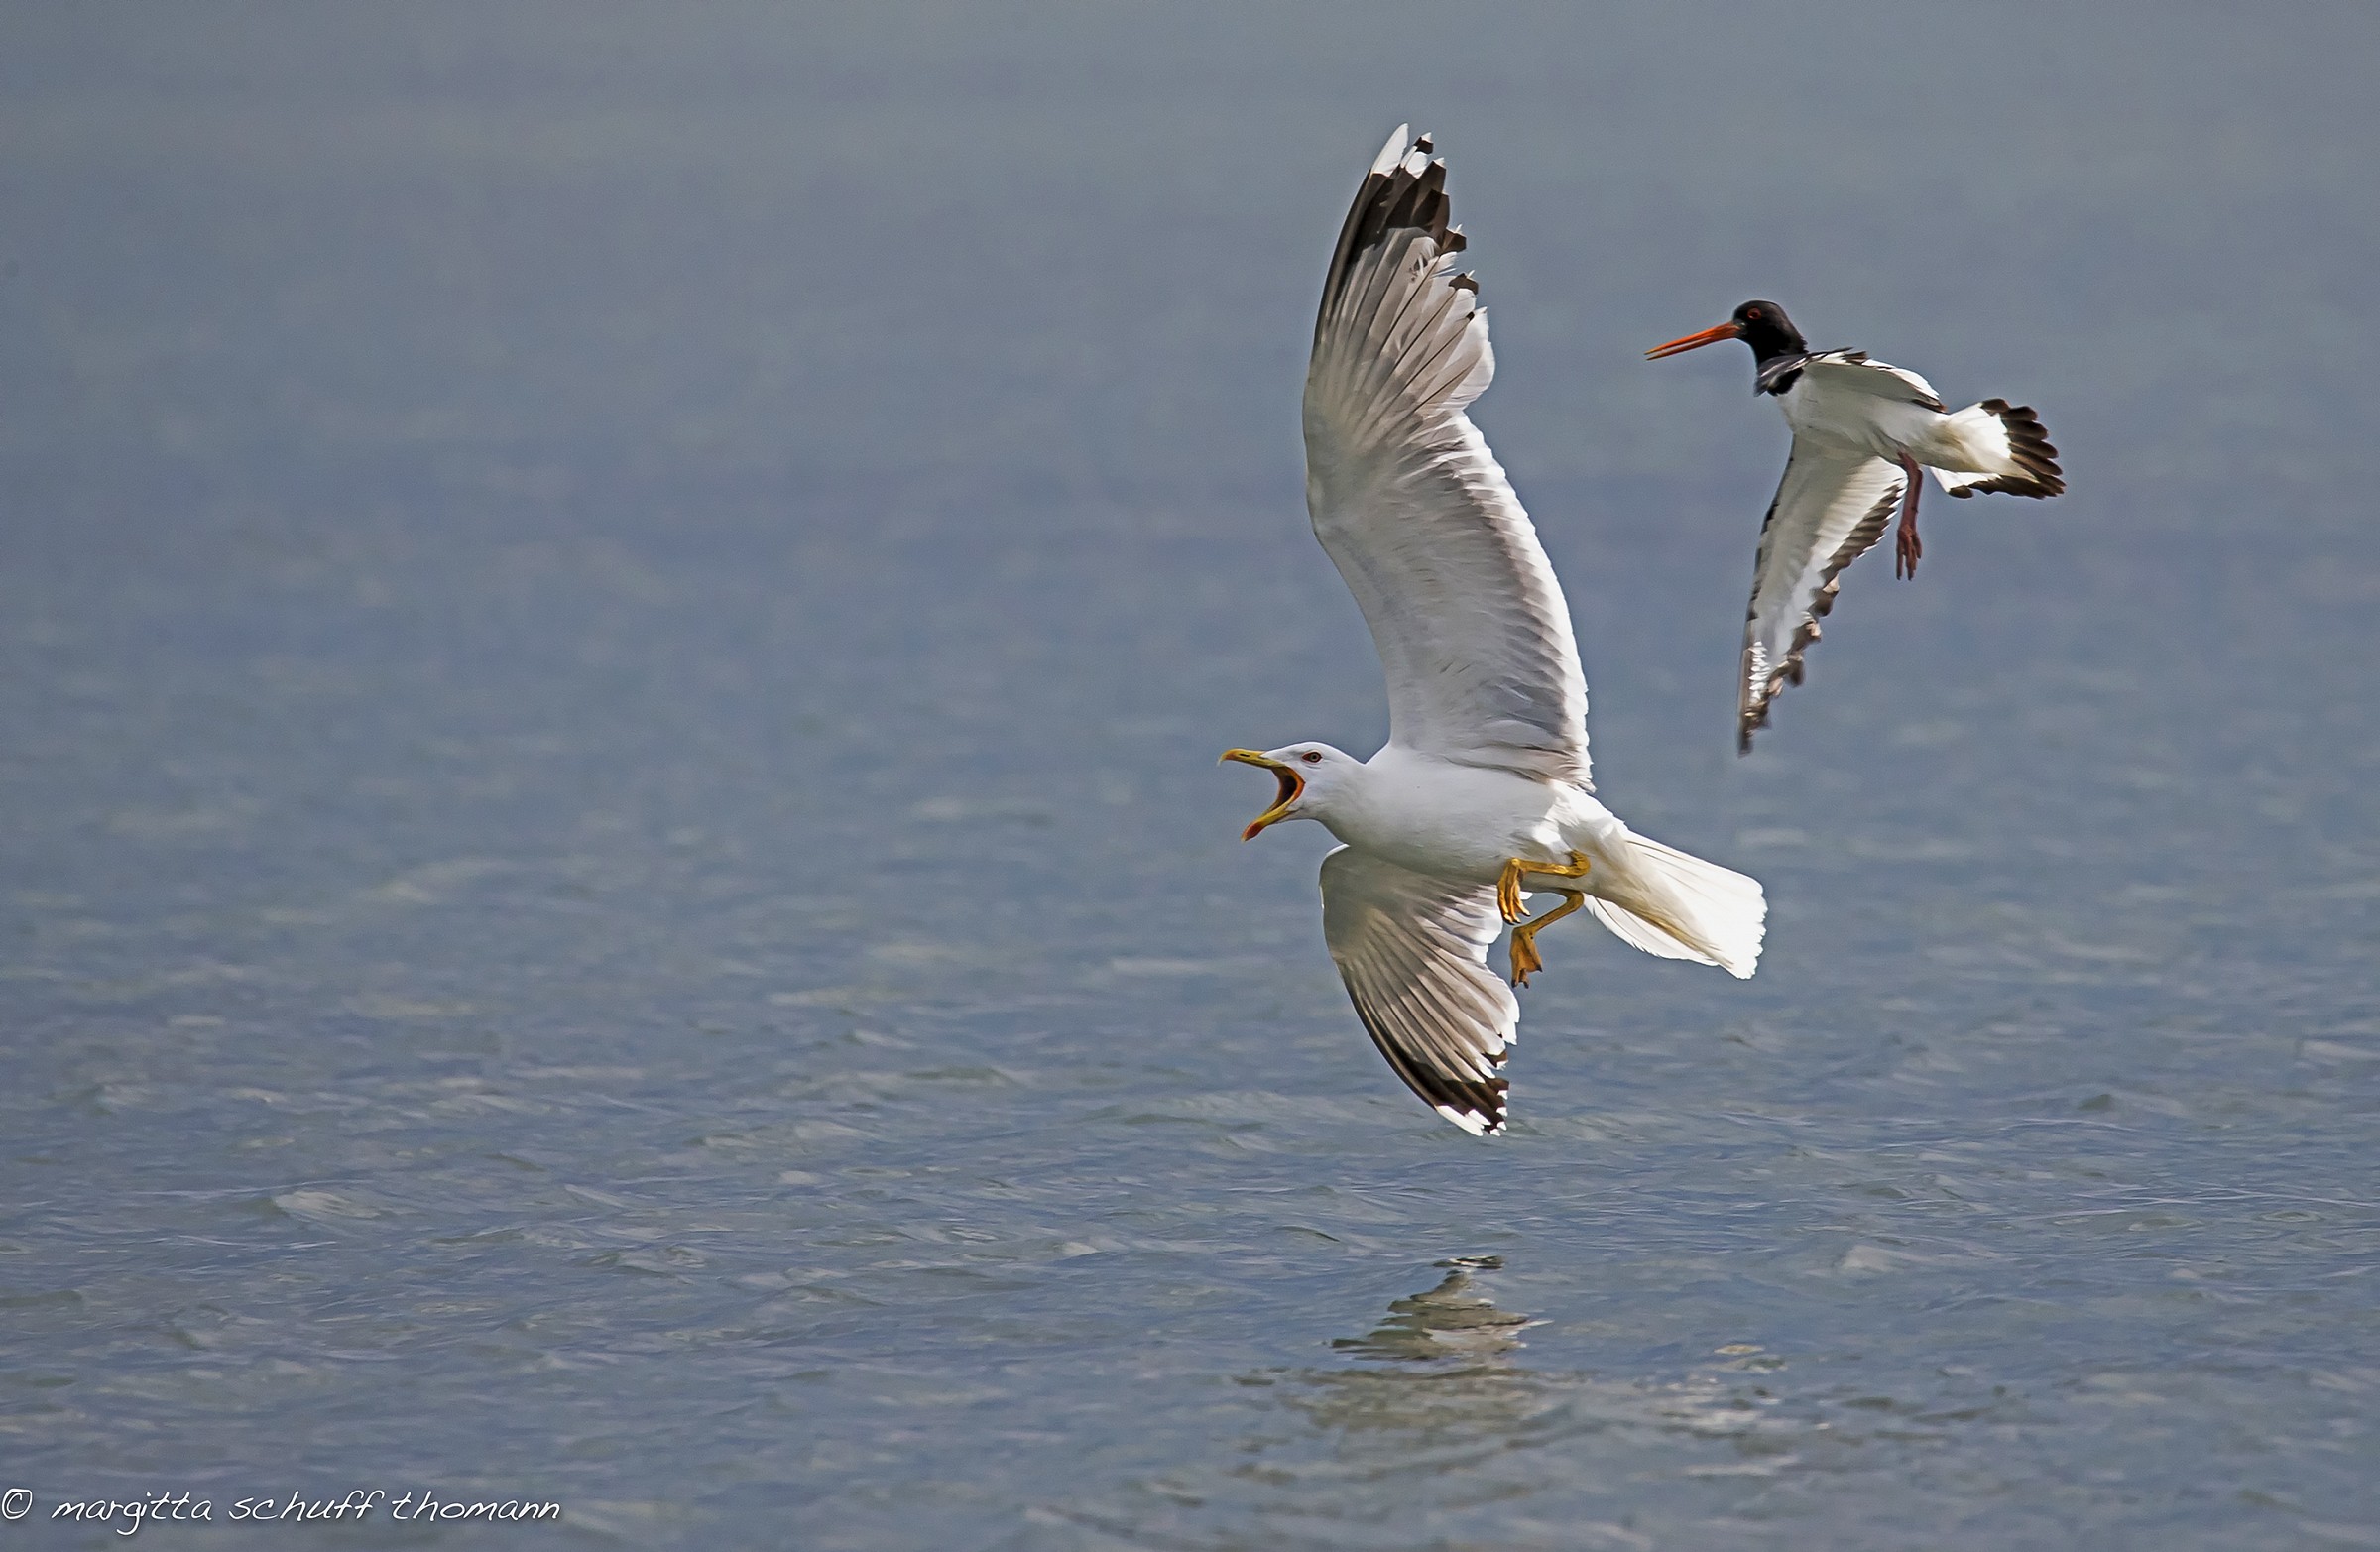 oystercatcher versus seagull .....